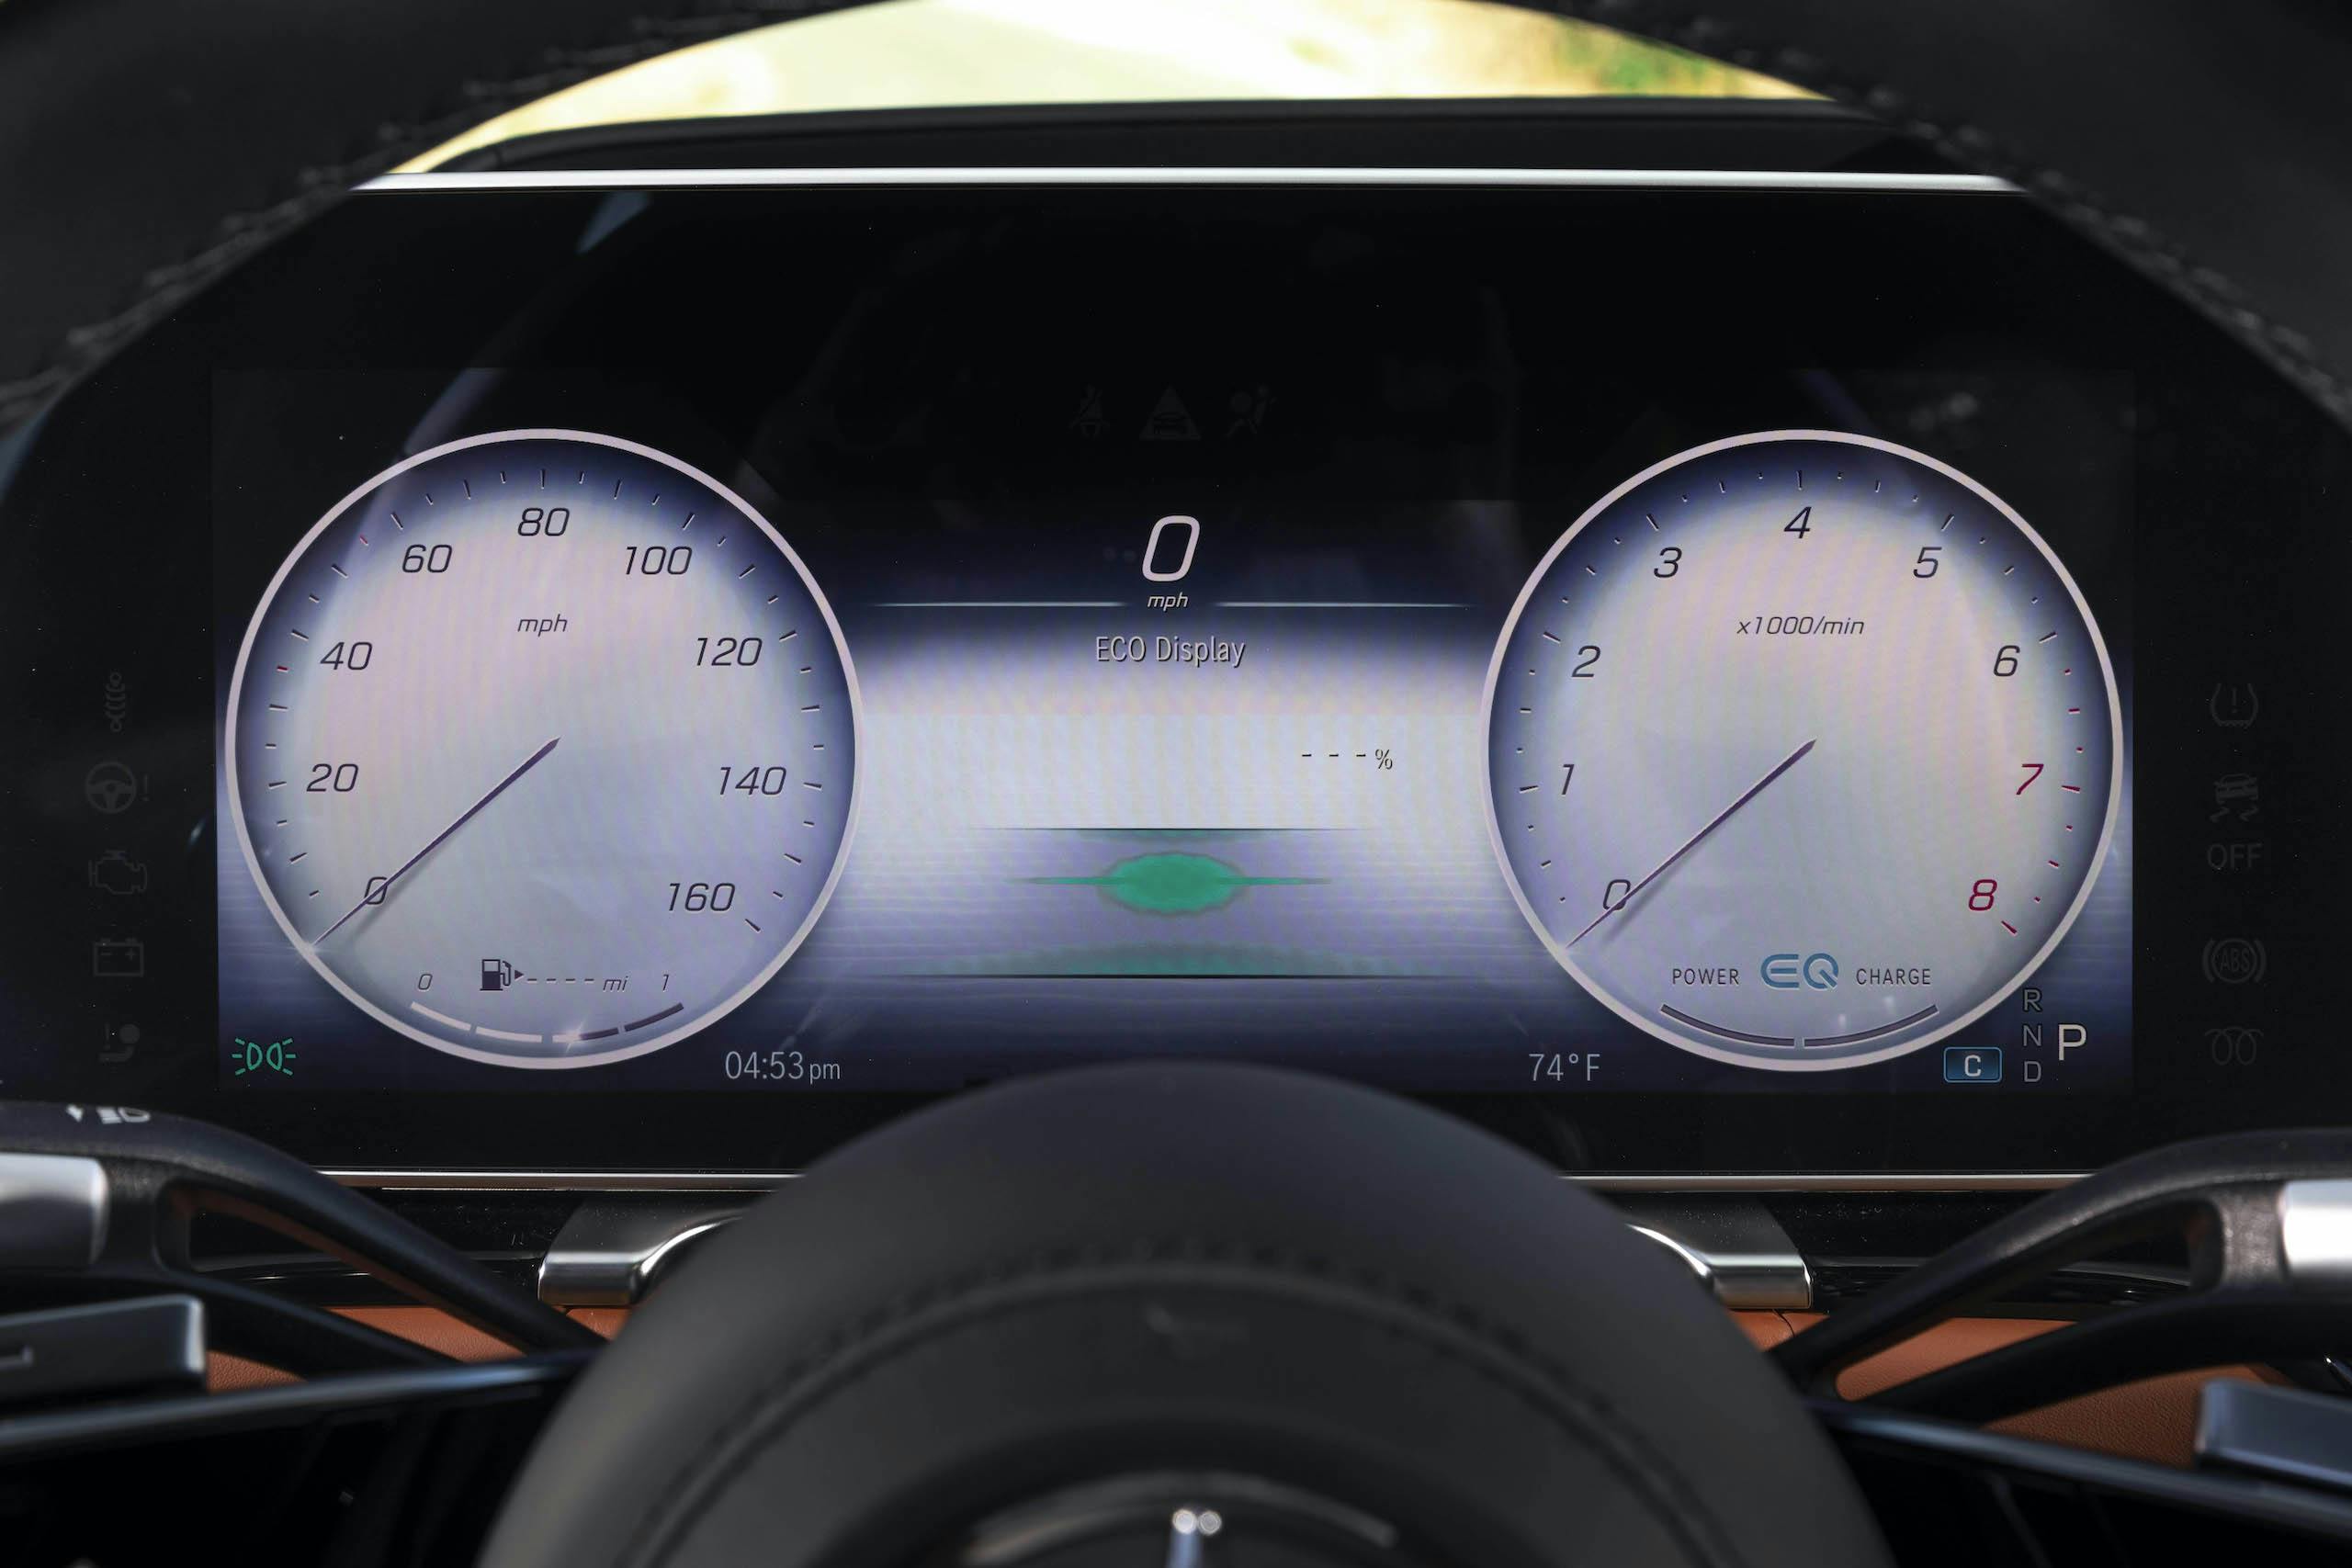 Mercedes Benz-S-Class interior dash display